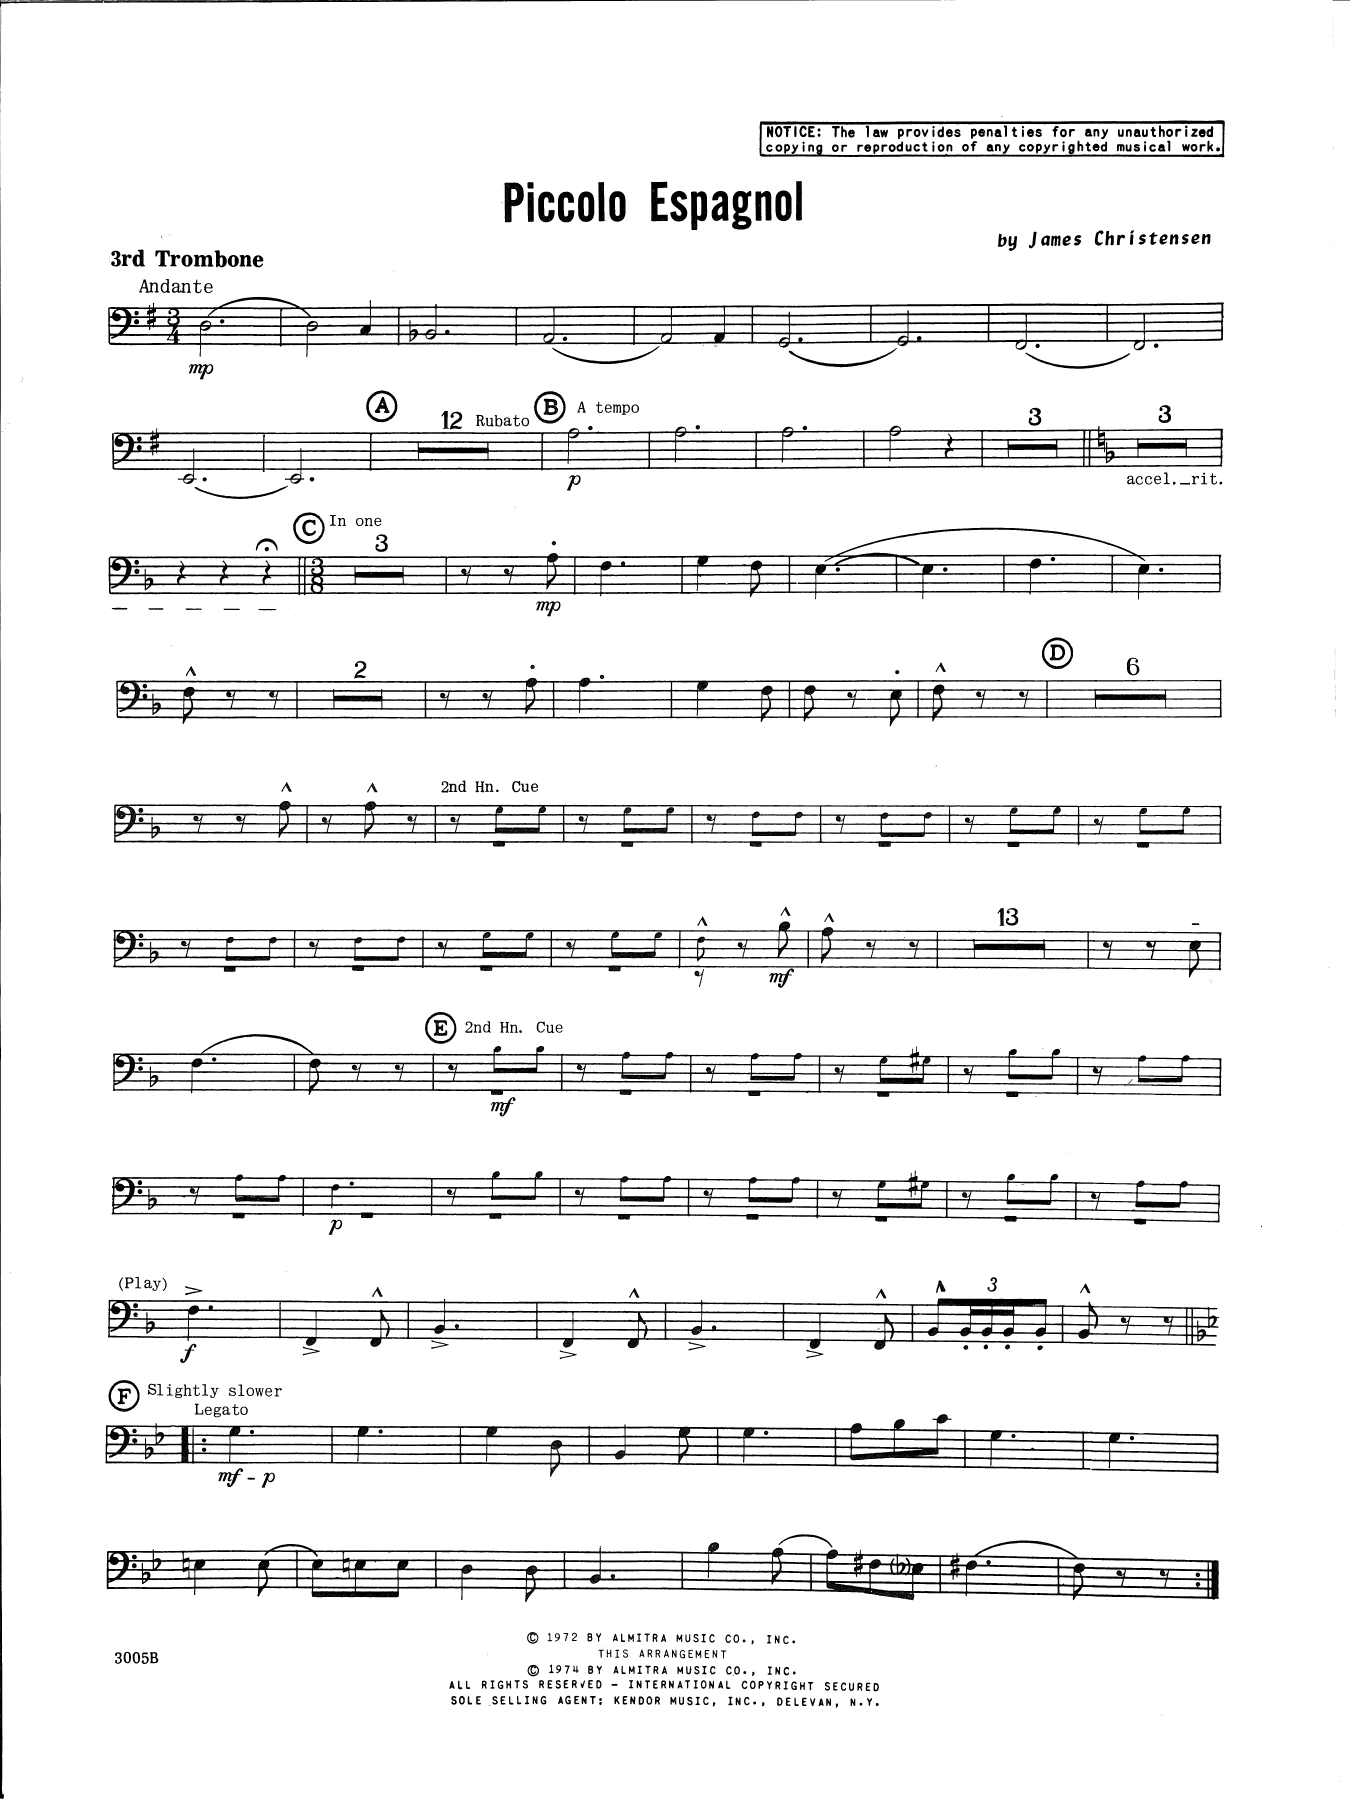 Download James Christensen Piccolo Espagnol - 3rd Trombone Sheet Music